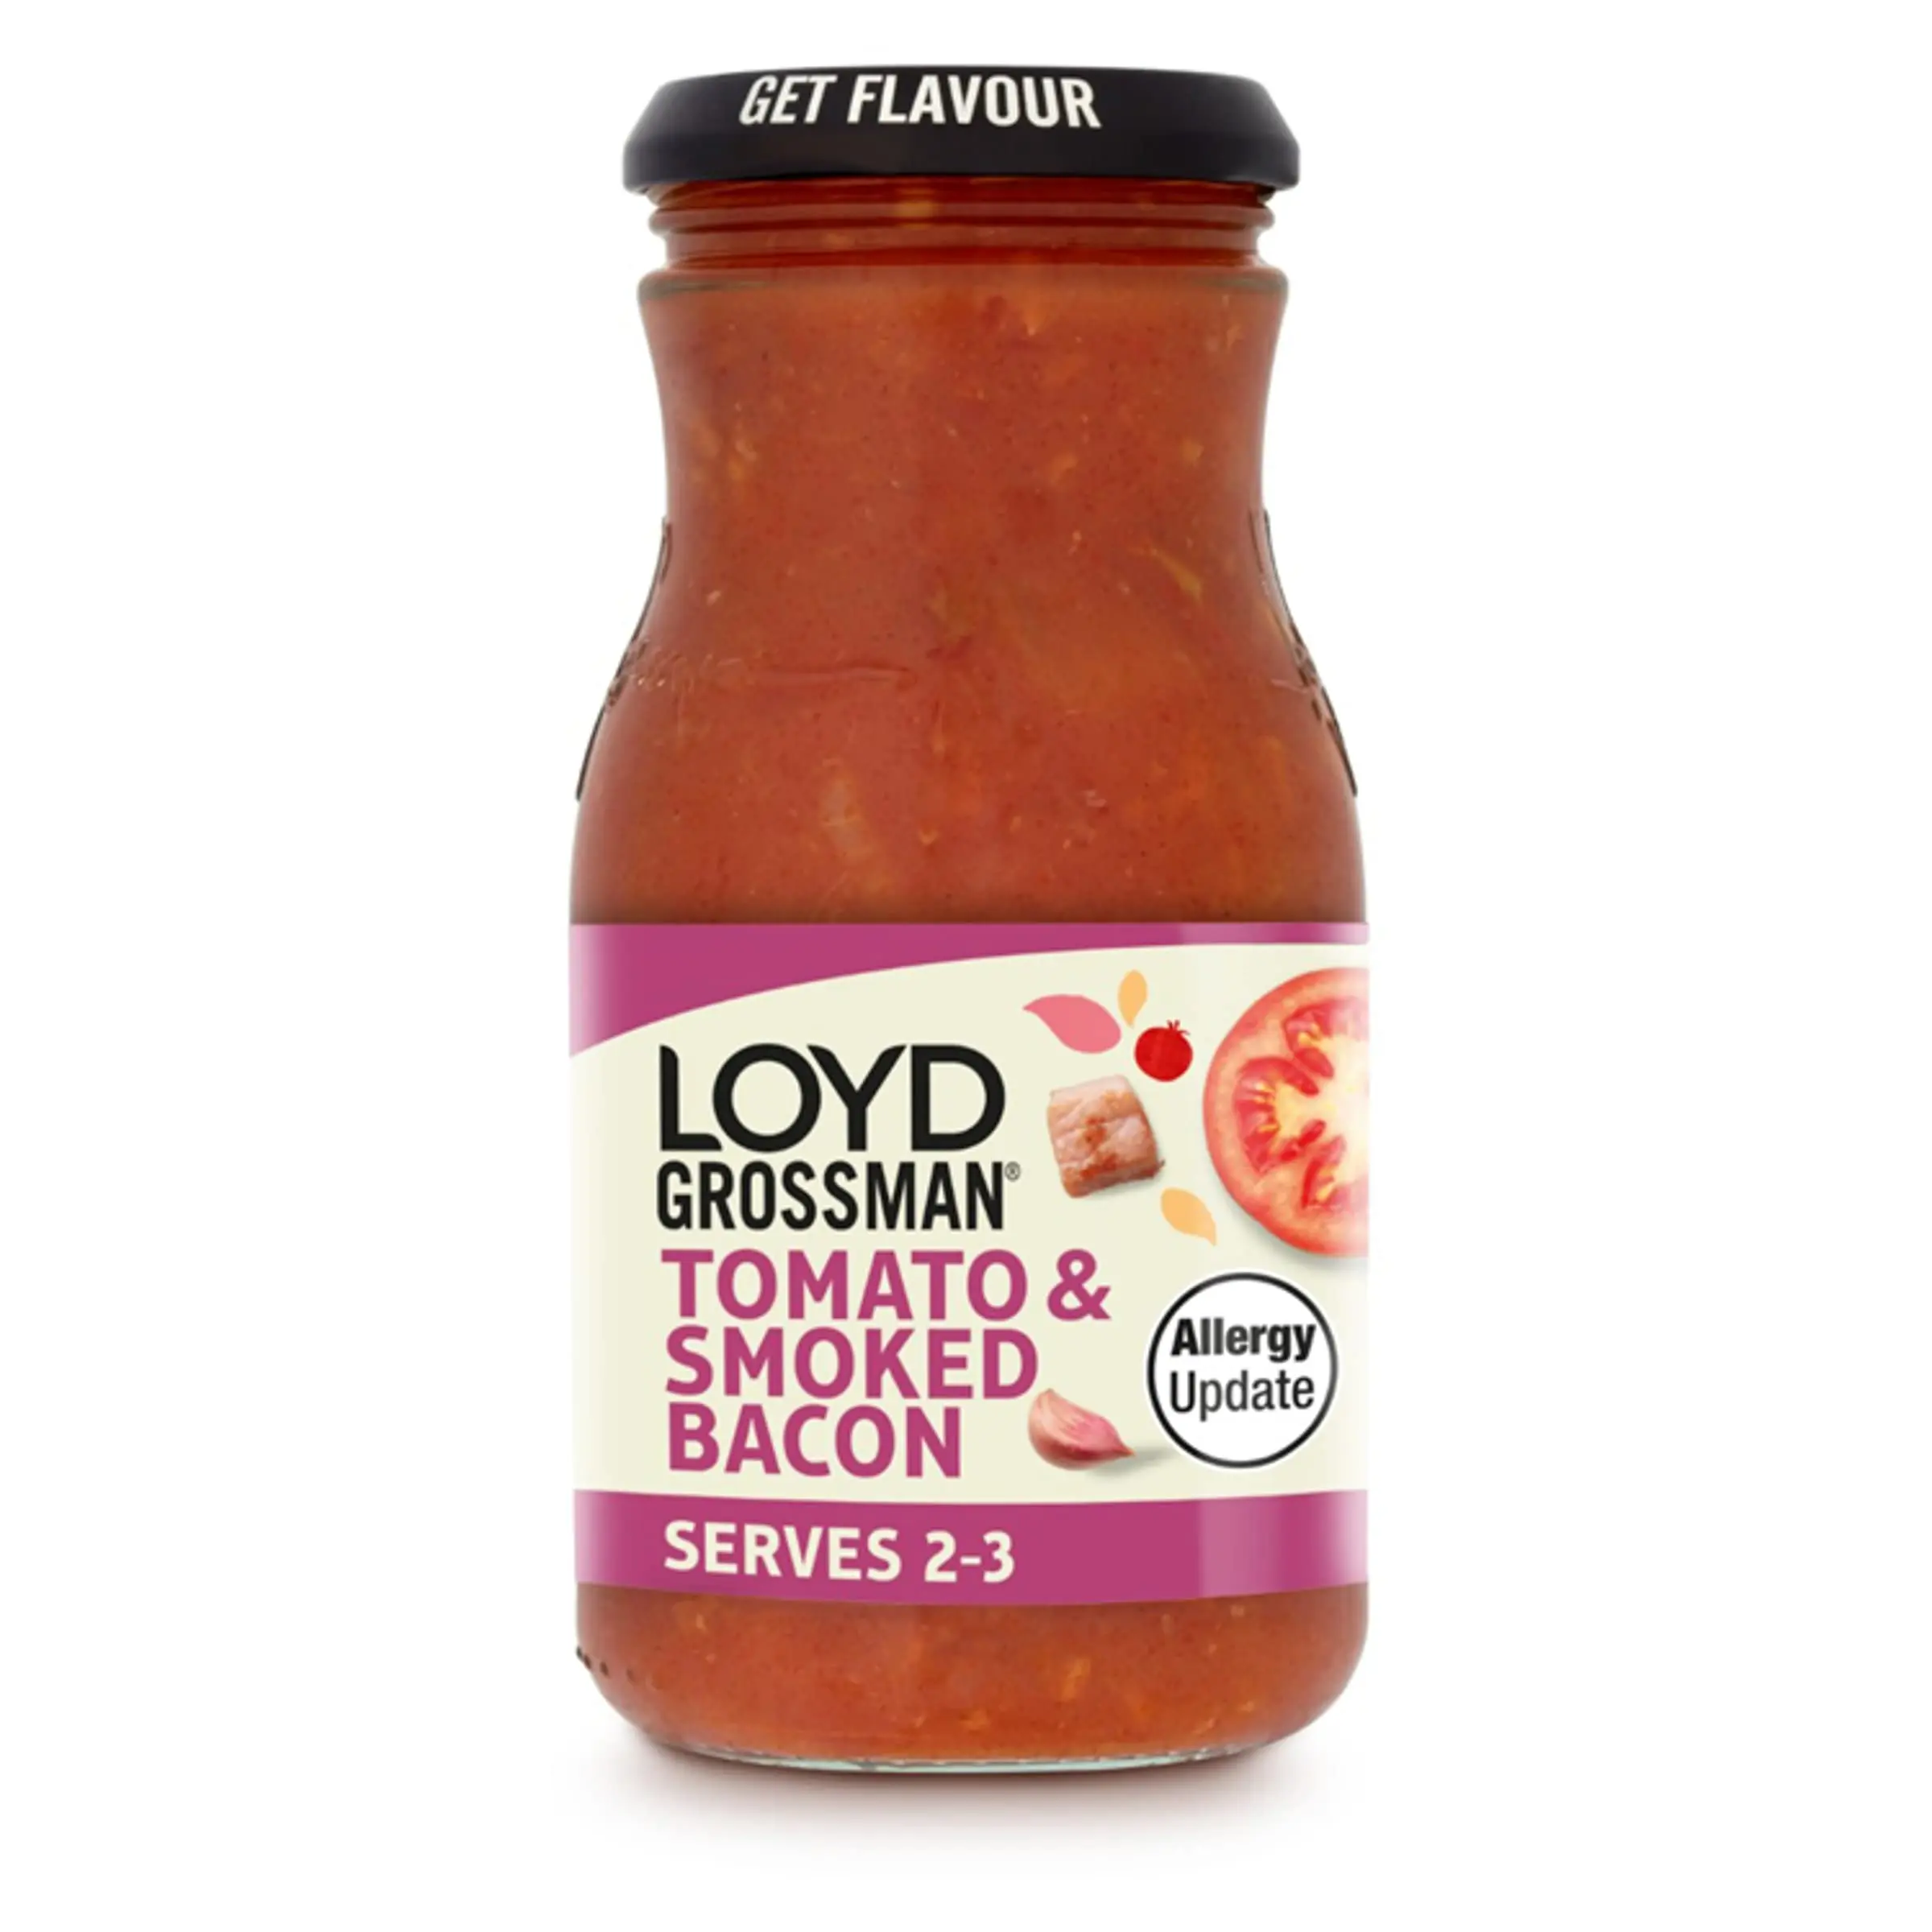 loyd grossman tomato and smoked bacon - How do you use Loyd Grossman sauce